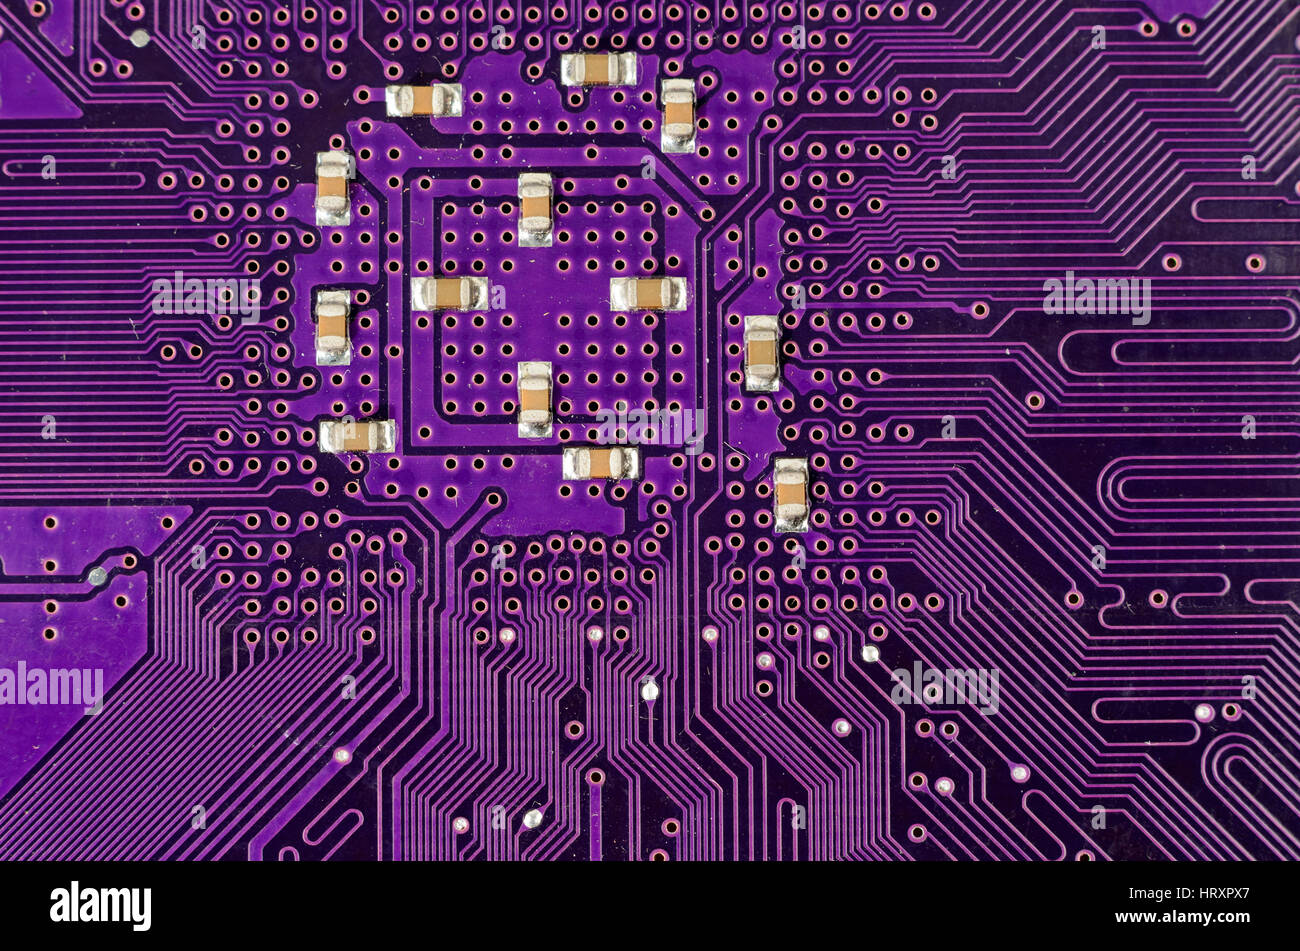 Electronic circuit plate background purple Stock Photo